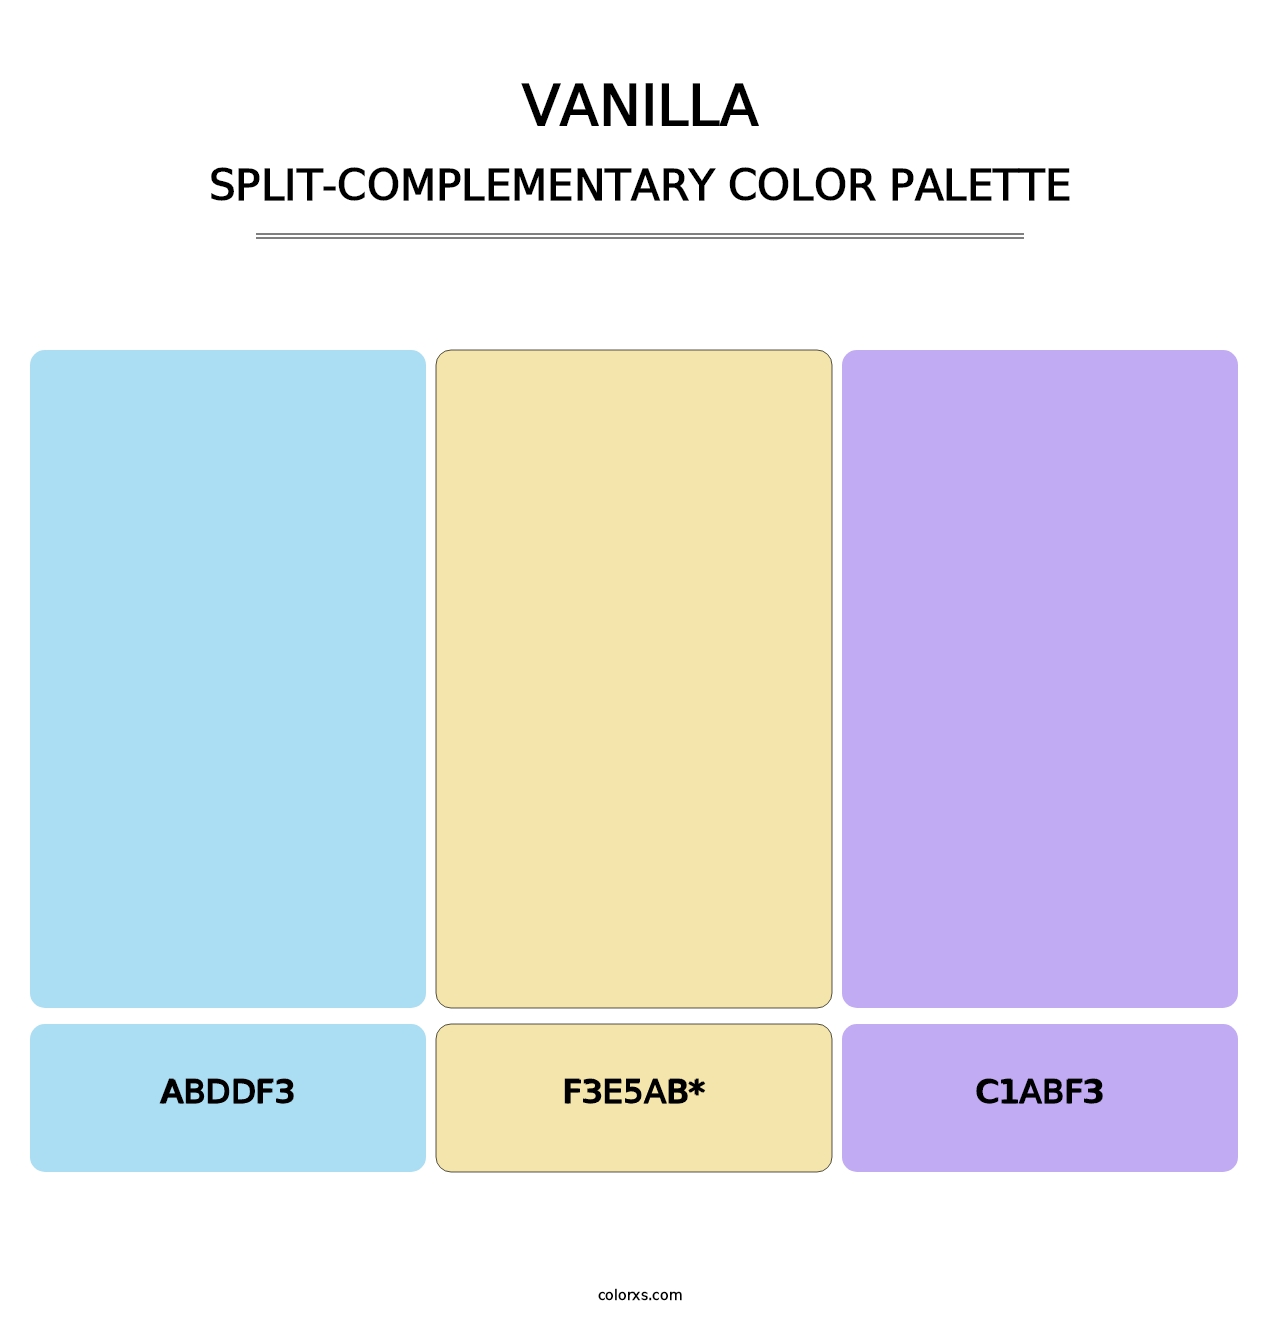 Vanilla - Split-Complementary Color Palette